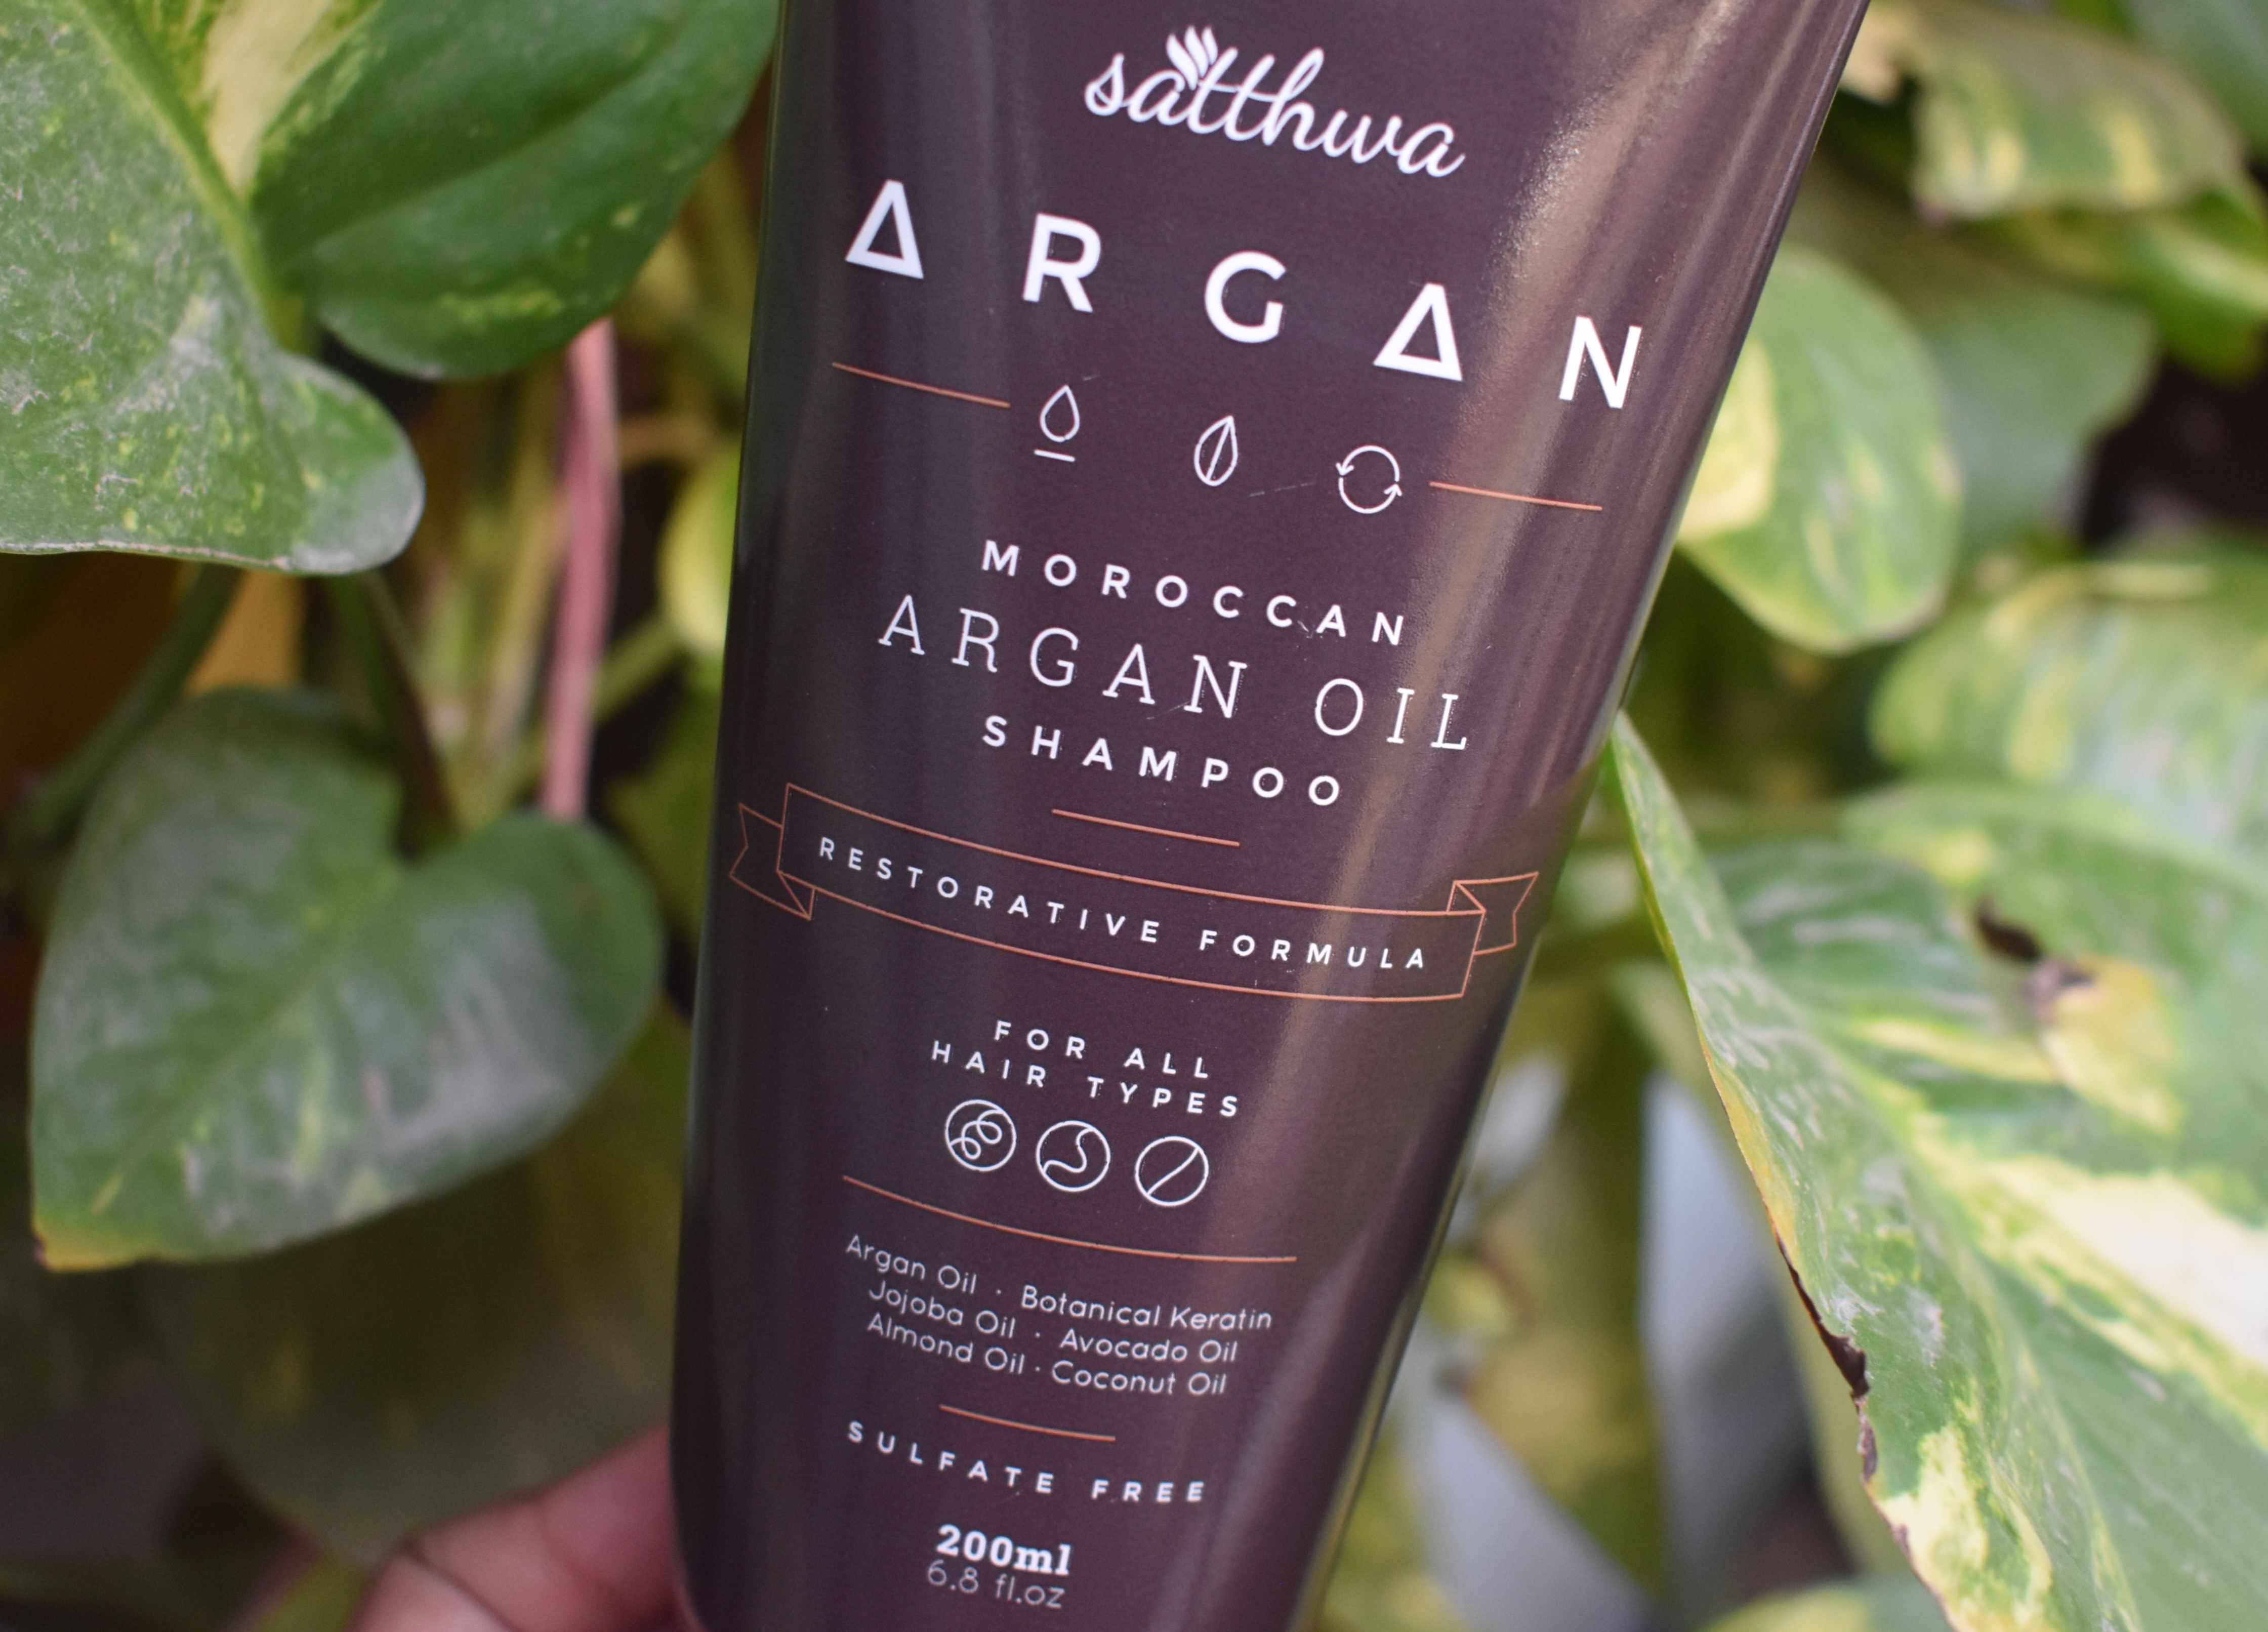 Satthwa Moroccan Argan Oil Shampoo Review